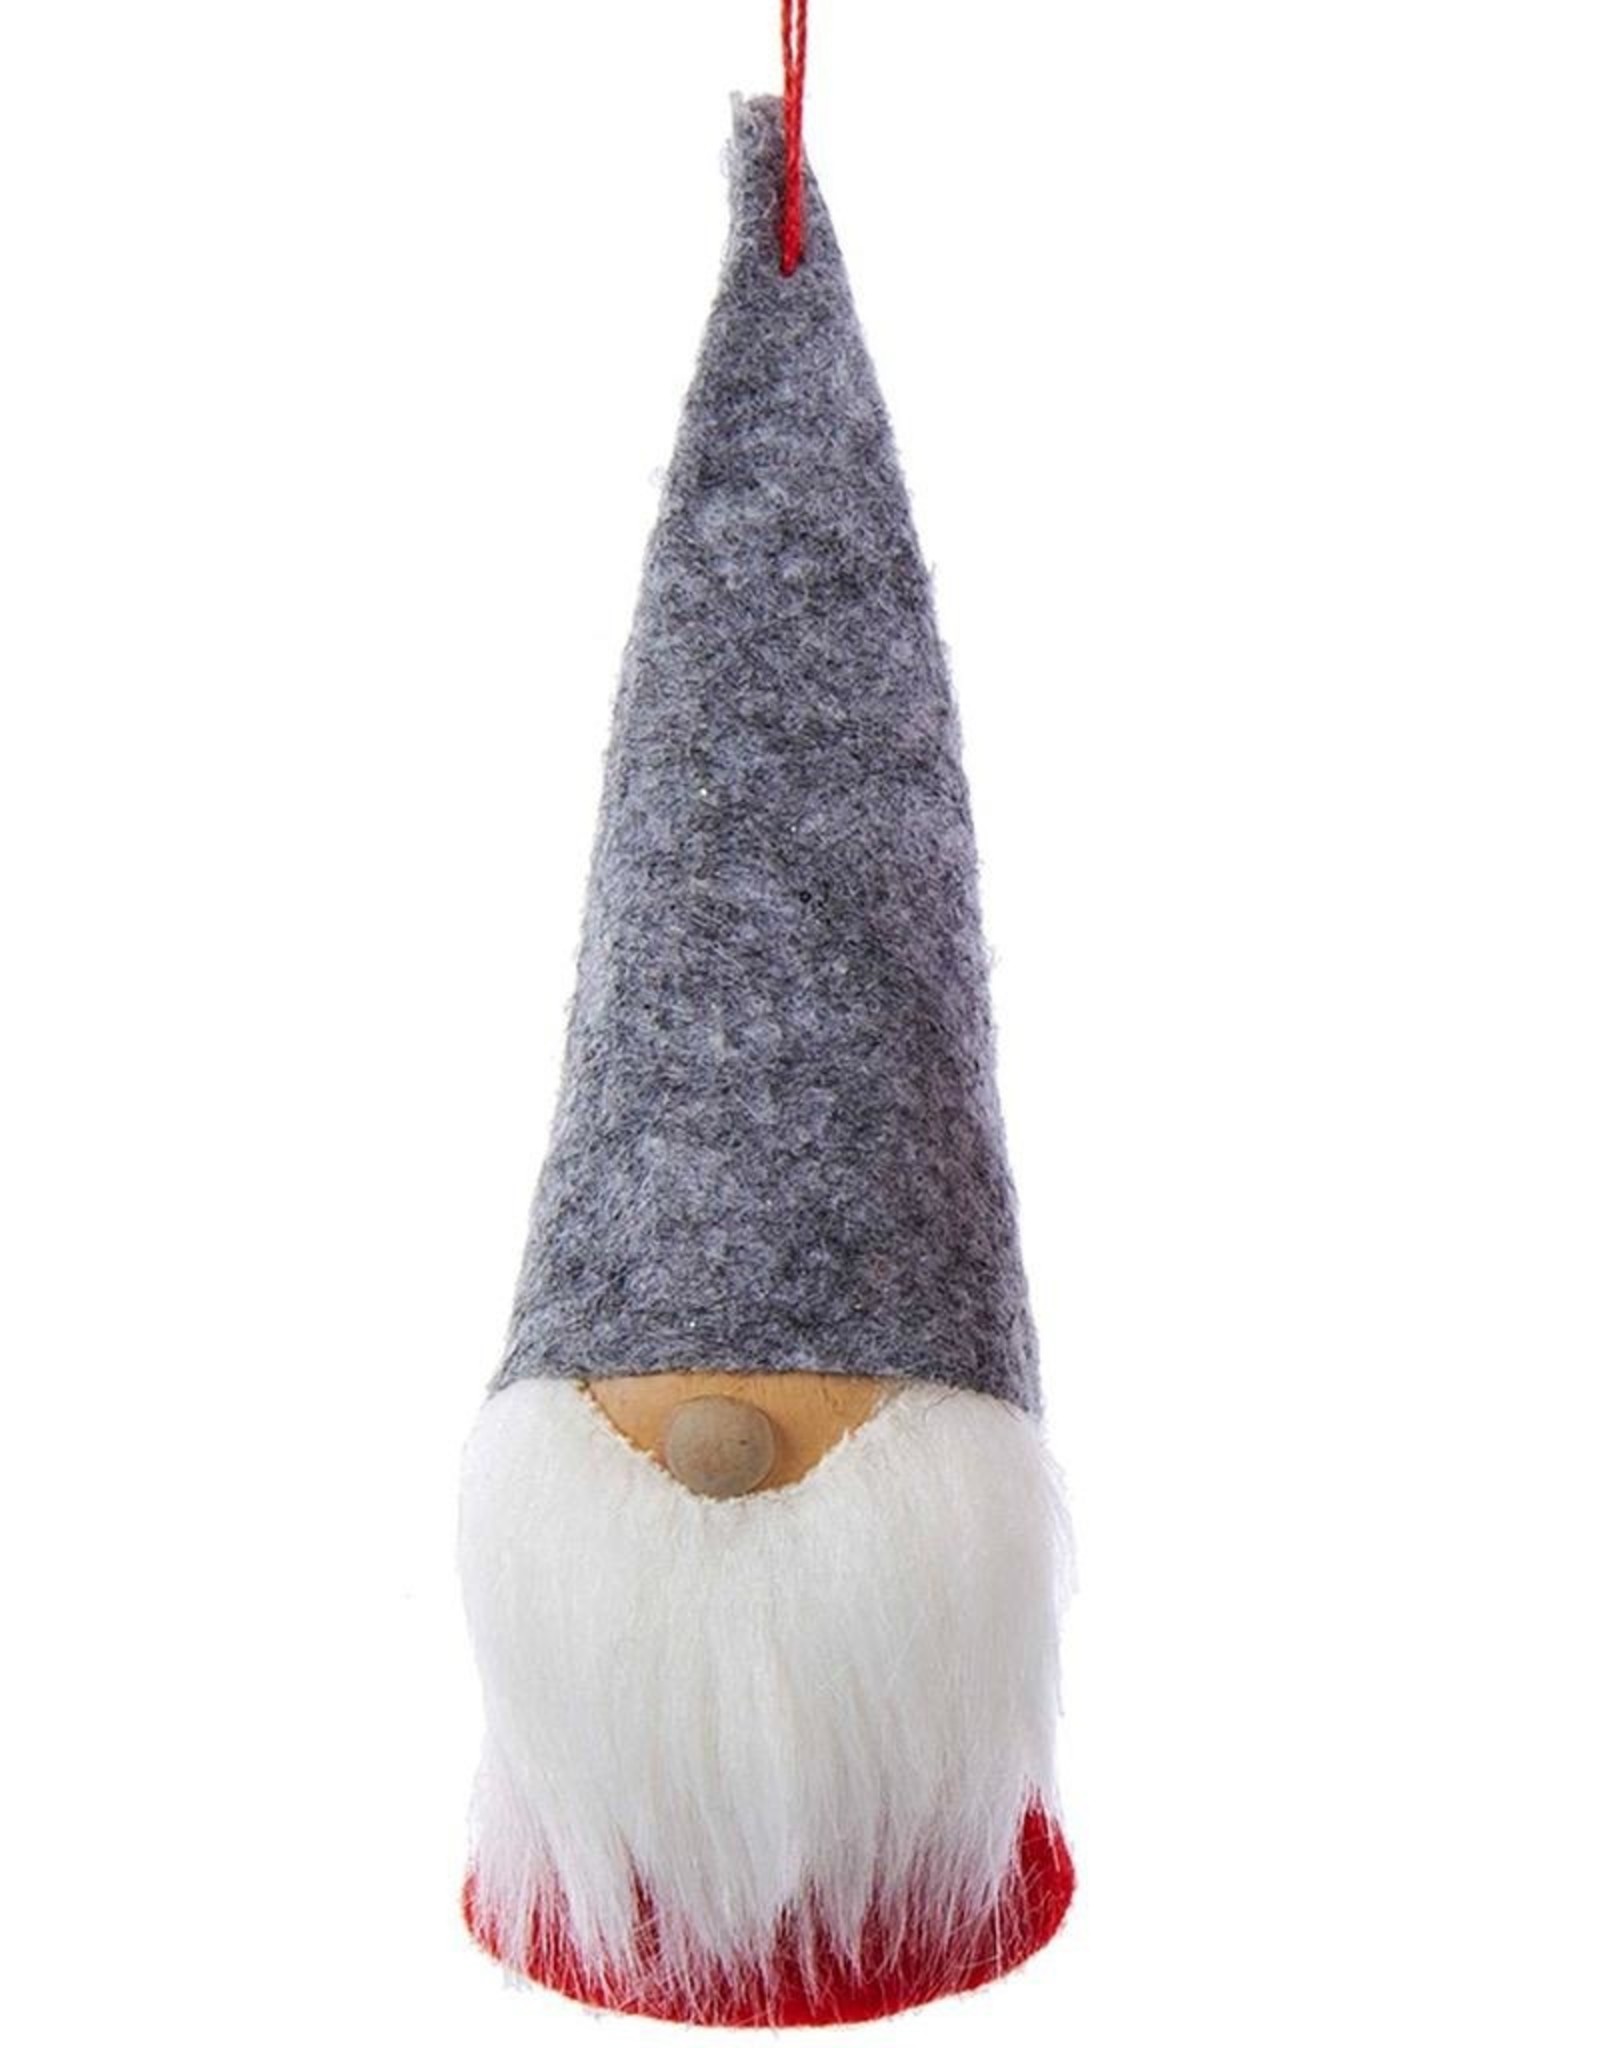 Kurt Adler Gnomes Wood and Felt Dwarf Gnome Ornament 5 inch w Grey Hat